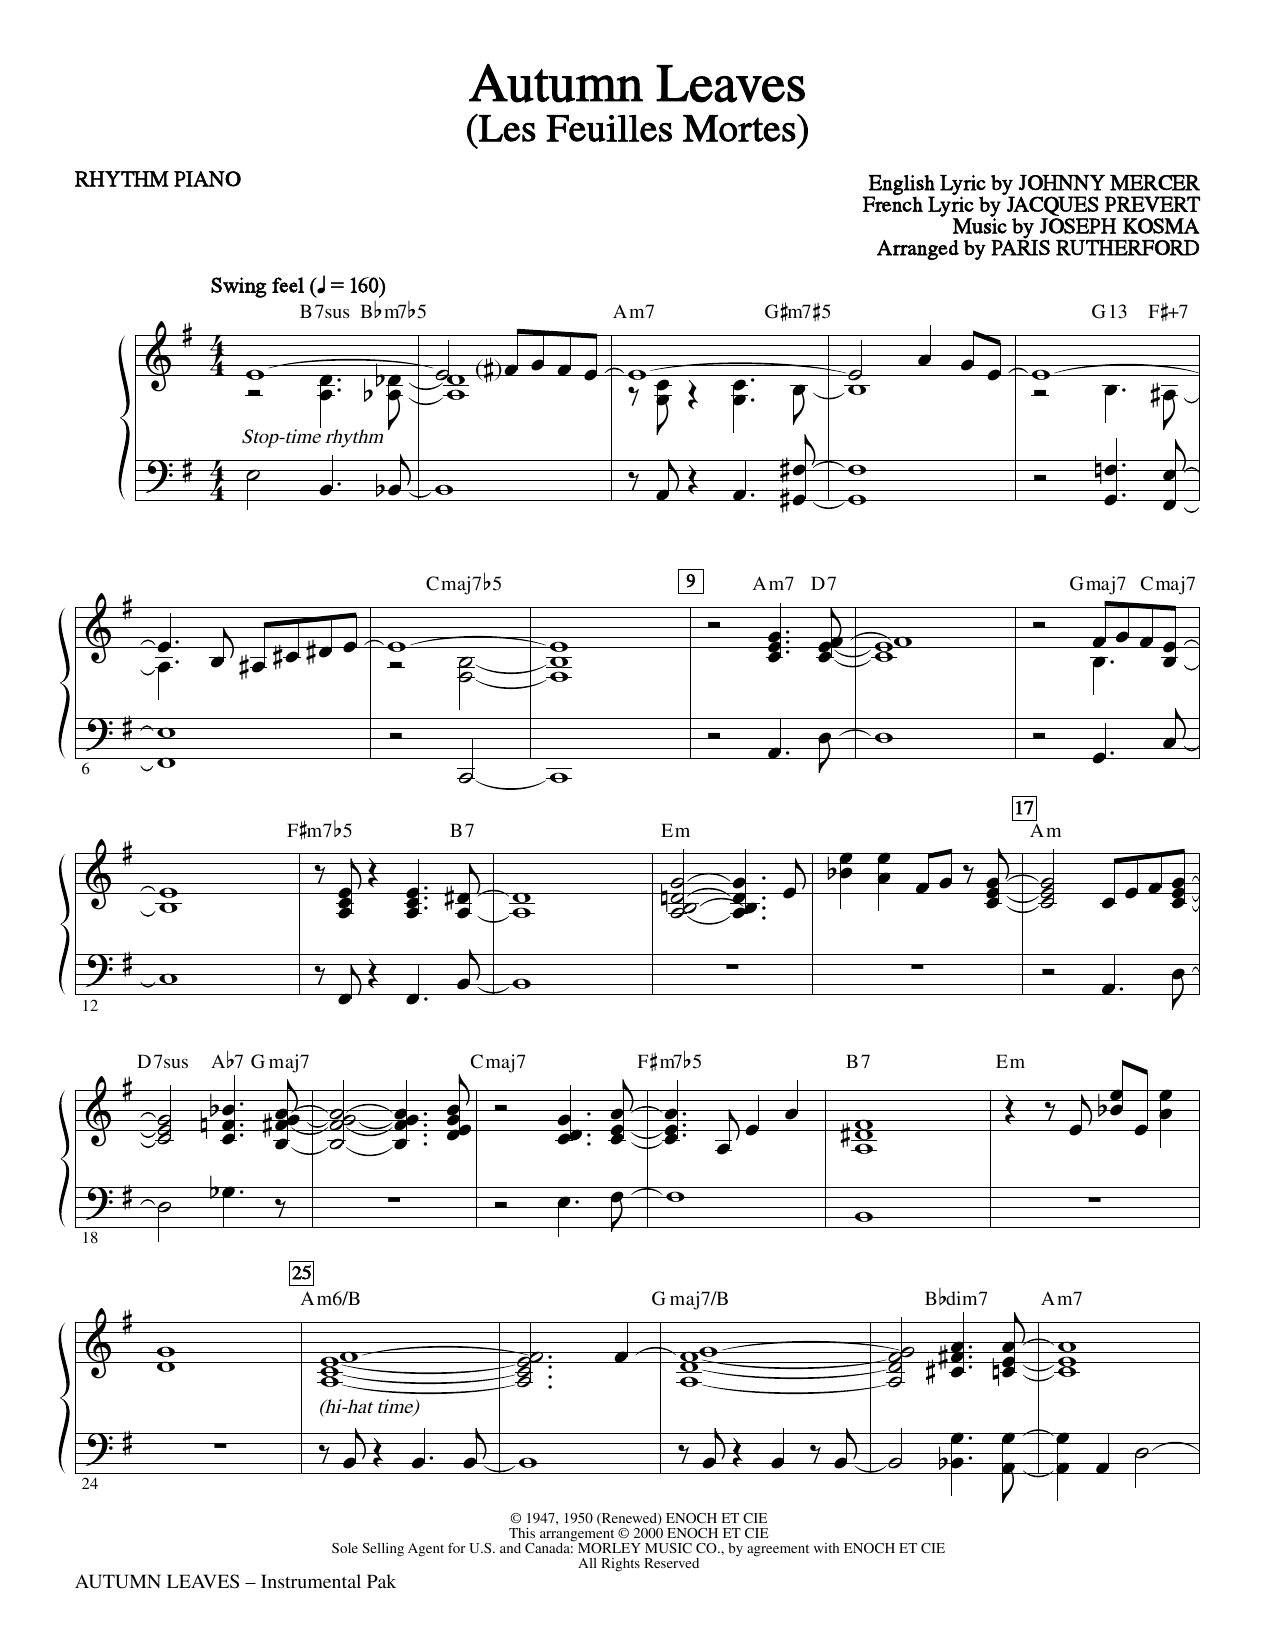 Paris Rutherford Autumn Leaves - Rhythm Piano Sheet Music Notes & Chords for Choir Instrumental Pak - Download or Print PDF